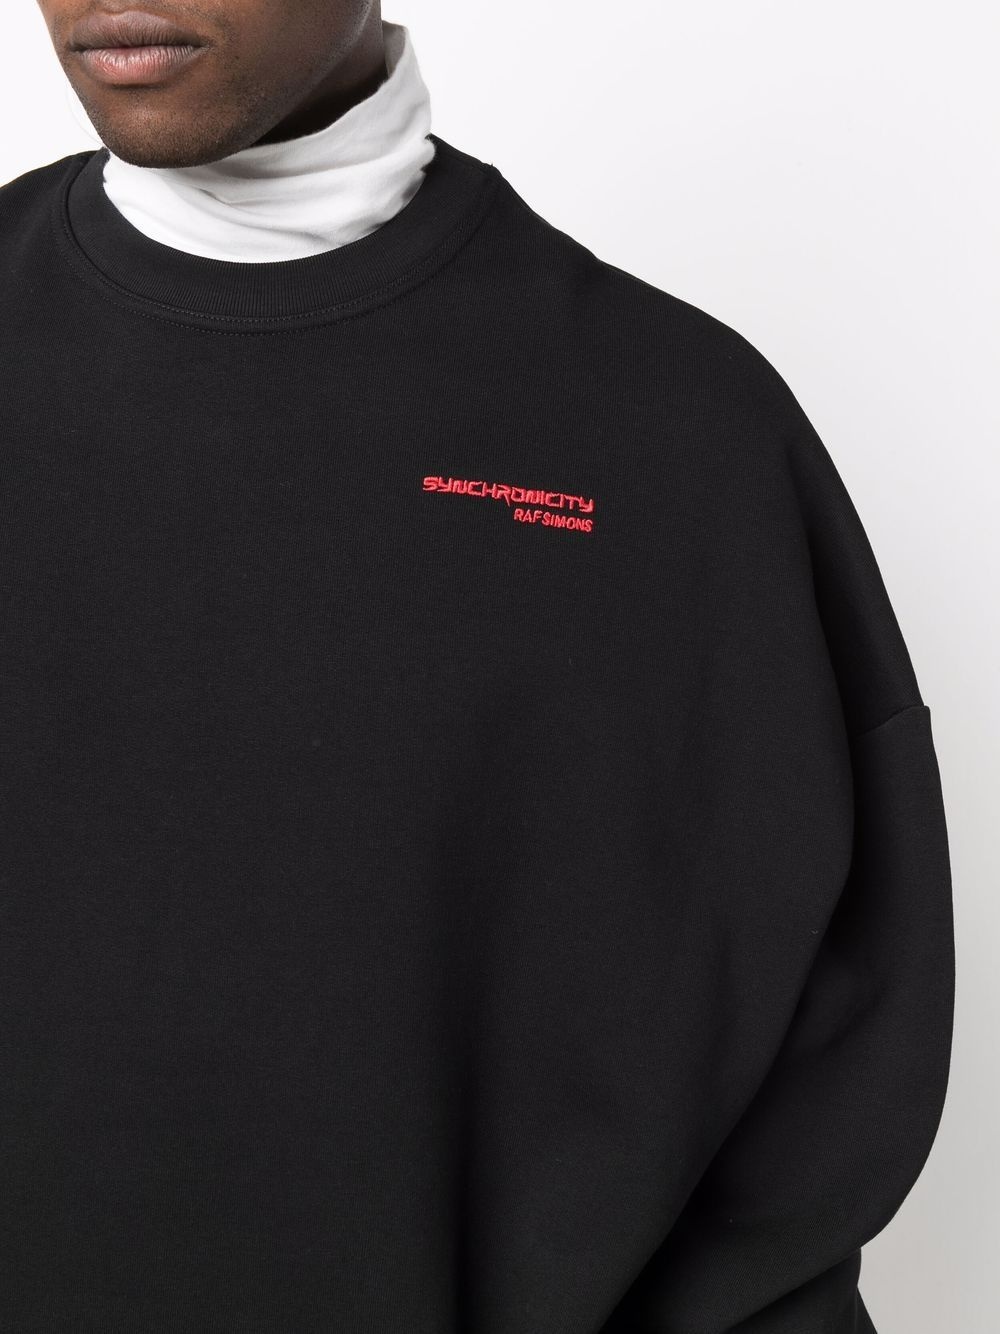 Synchronicity-embroidered sweatshirt - 5